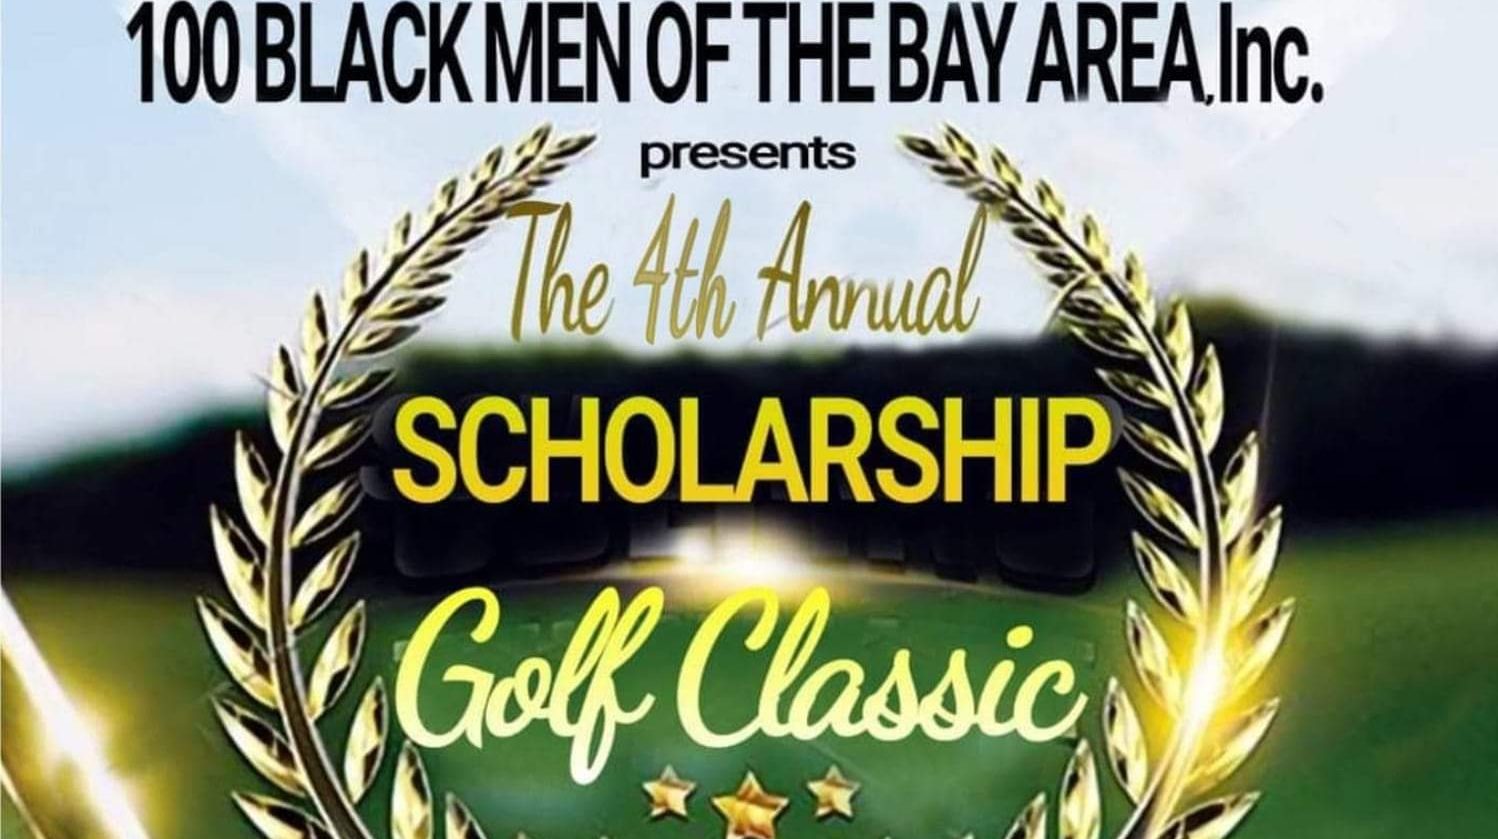 100 Black Men Scholarship Golf Classic